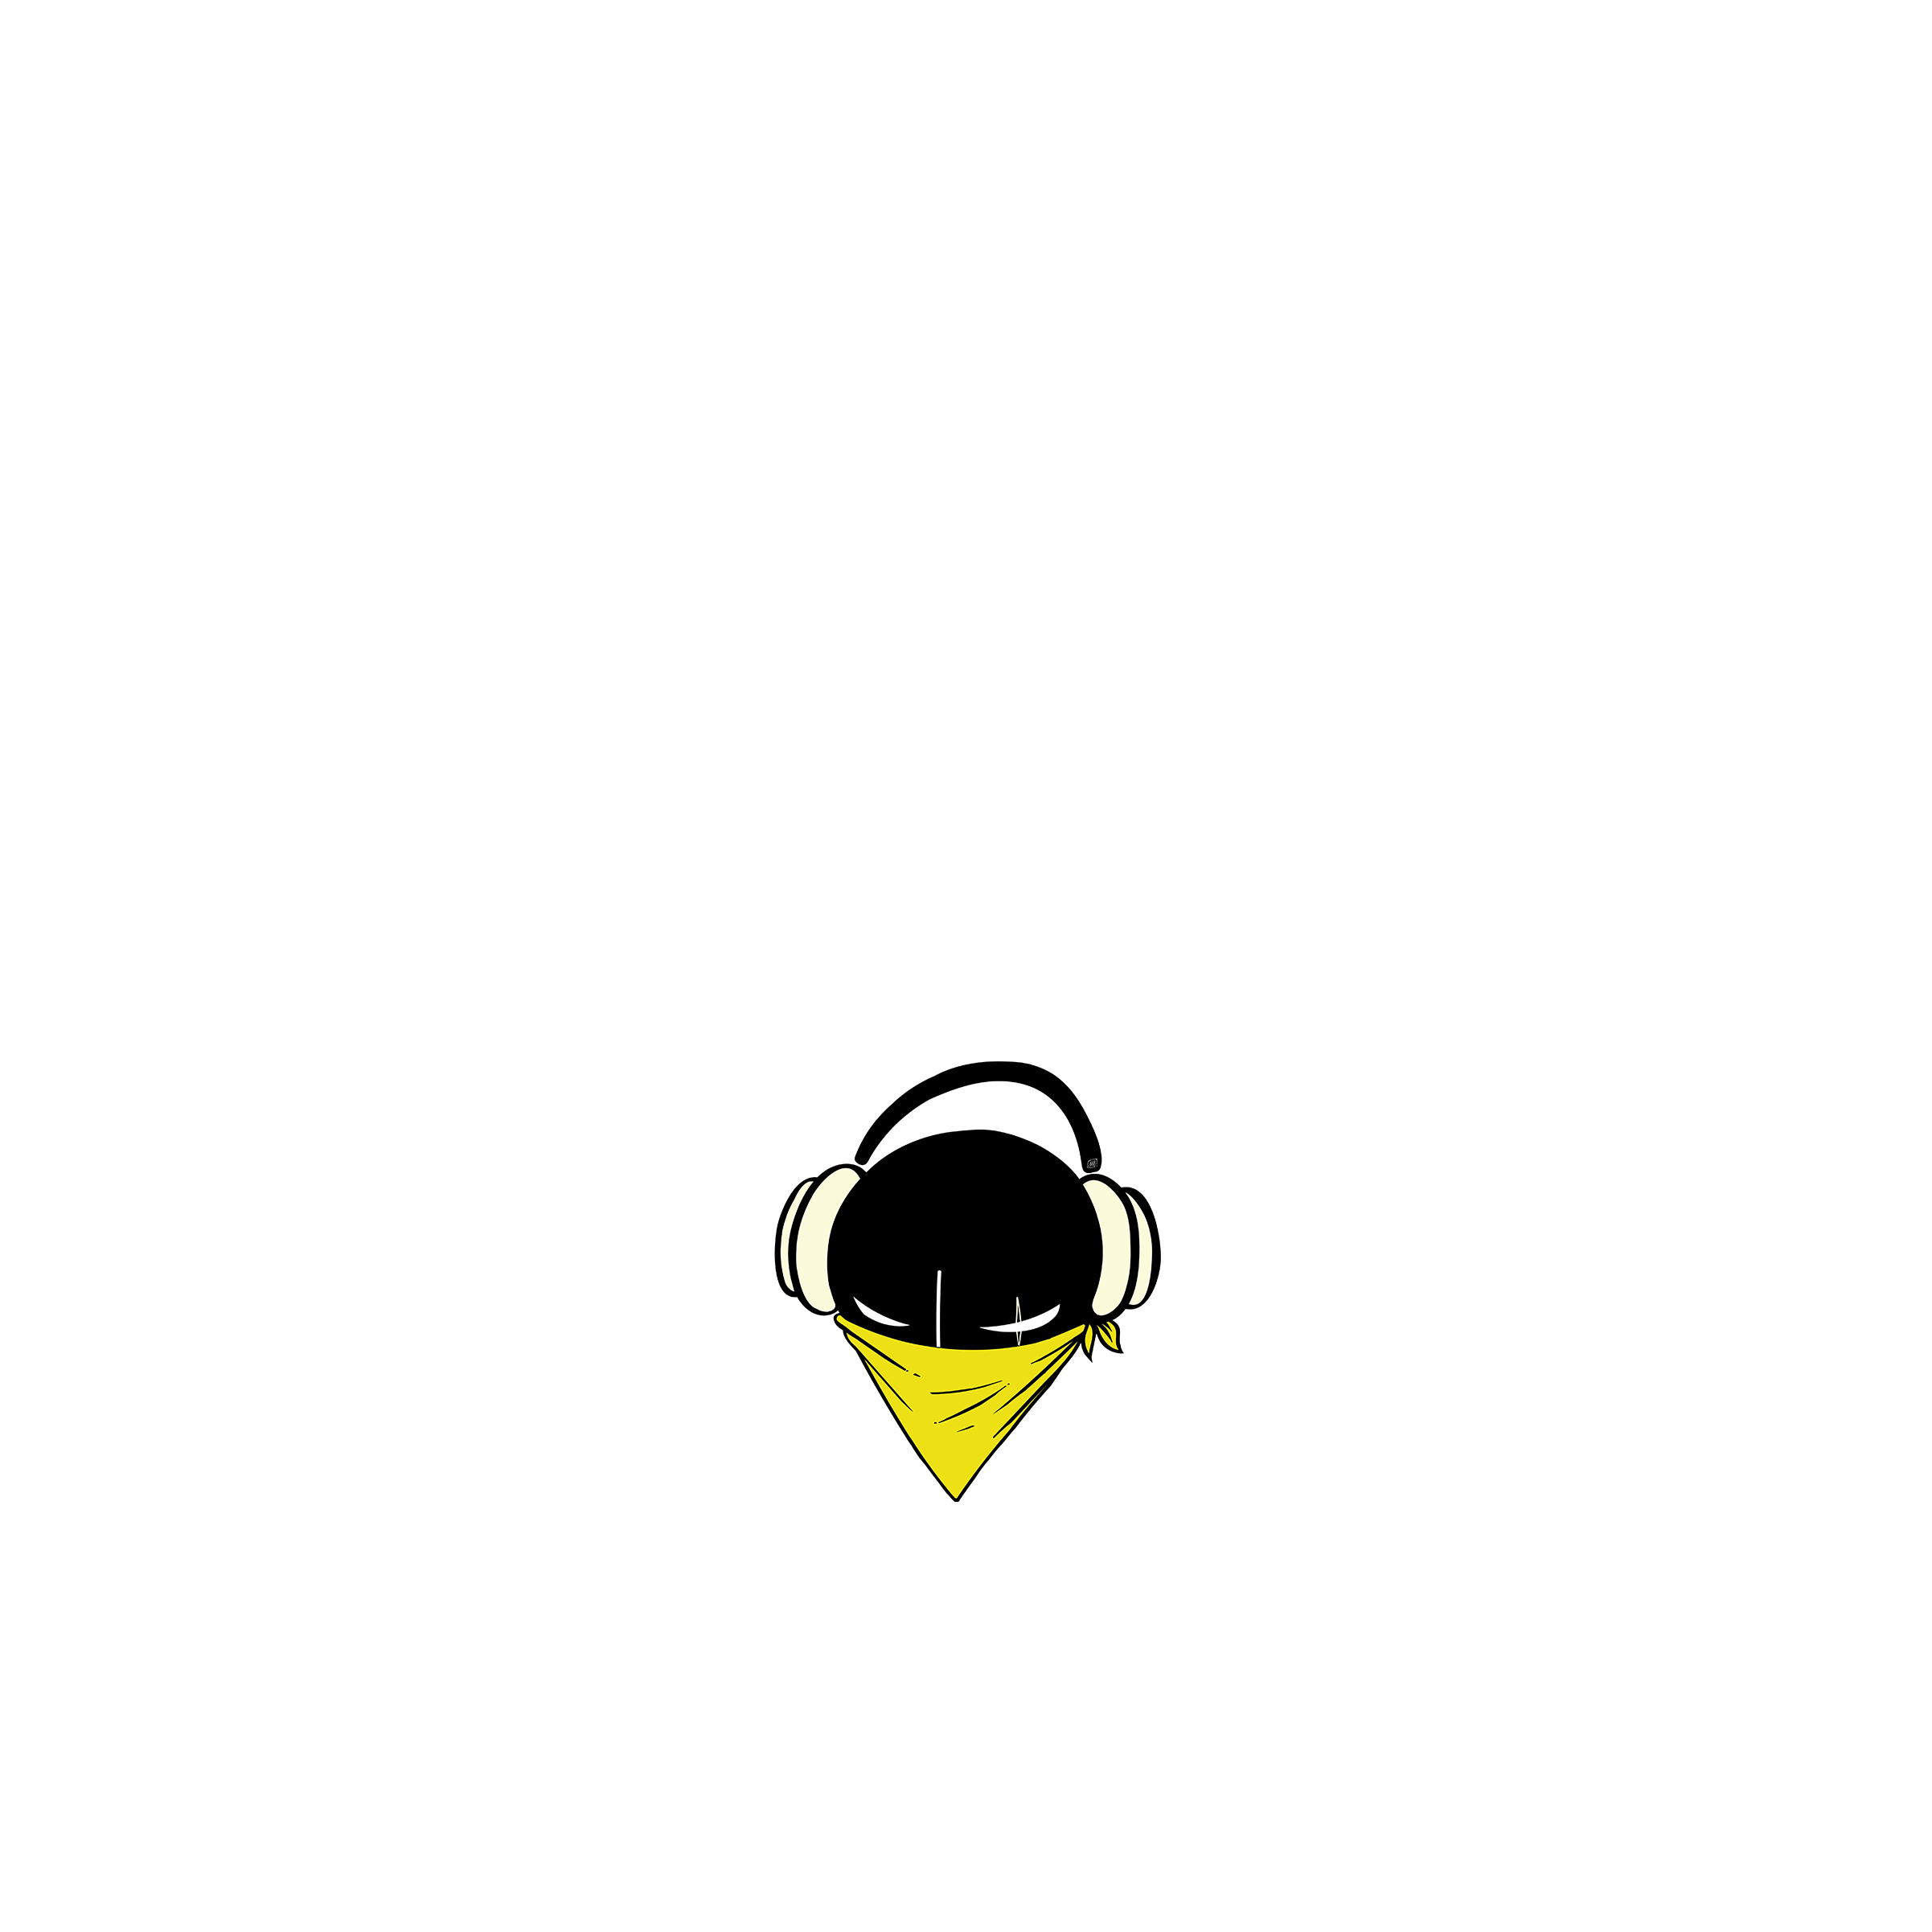 NOM-LOGO_DOOZ-KAWA_SITE-INTERNET